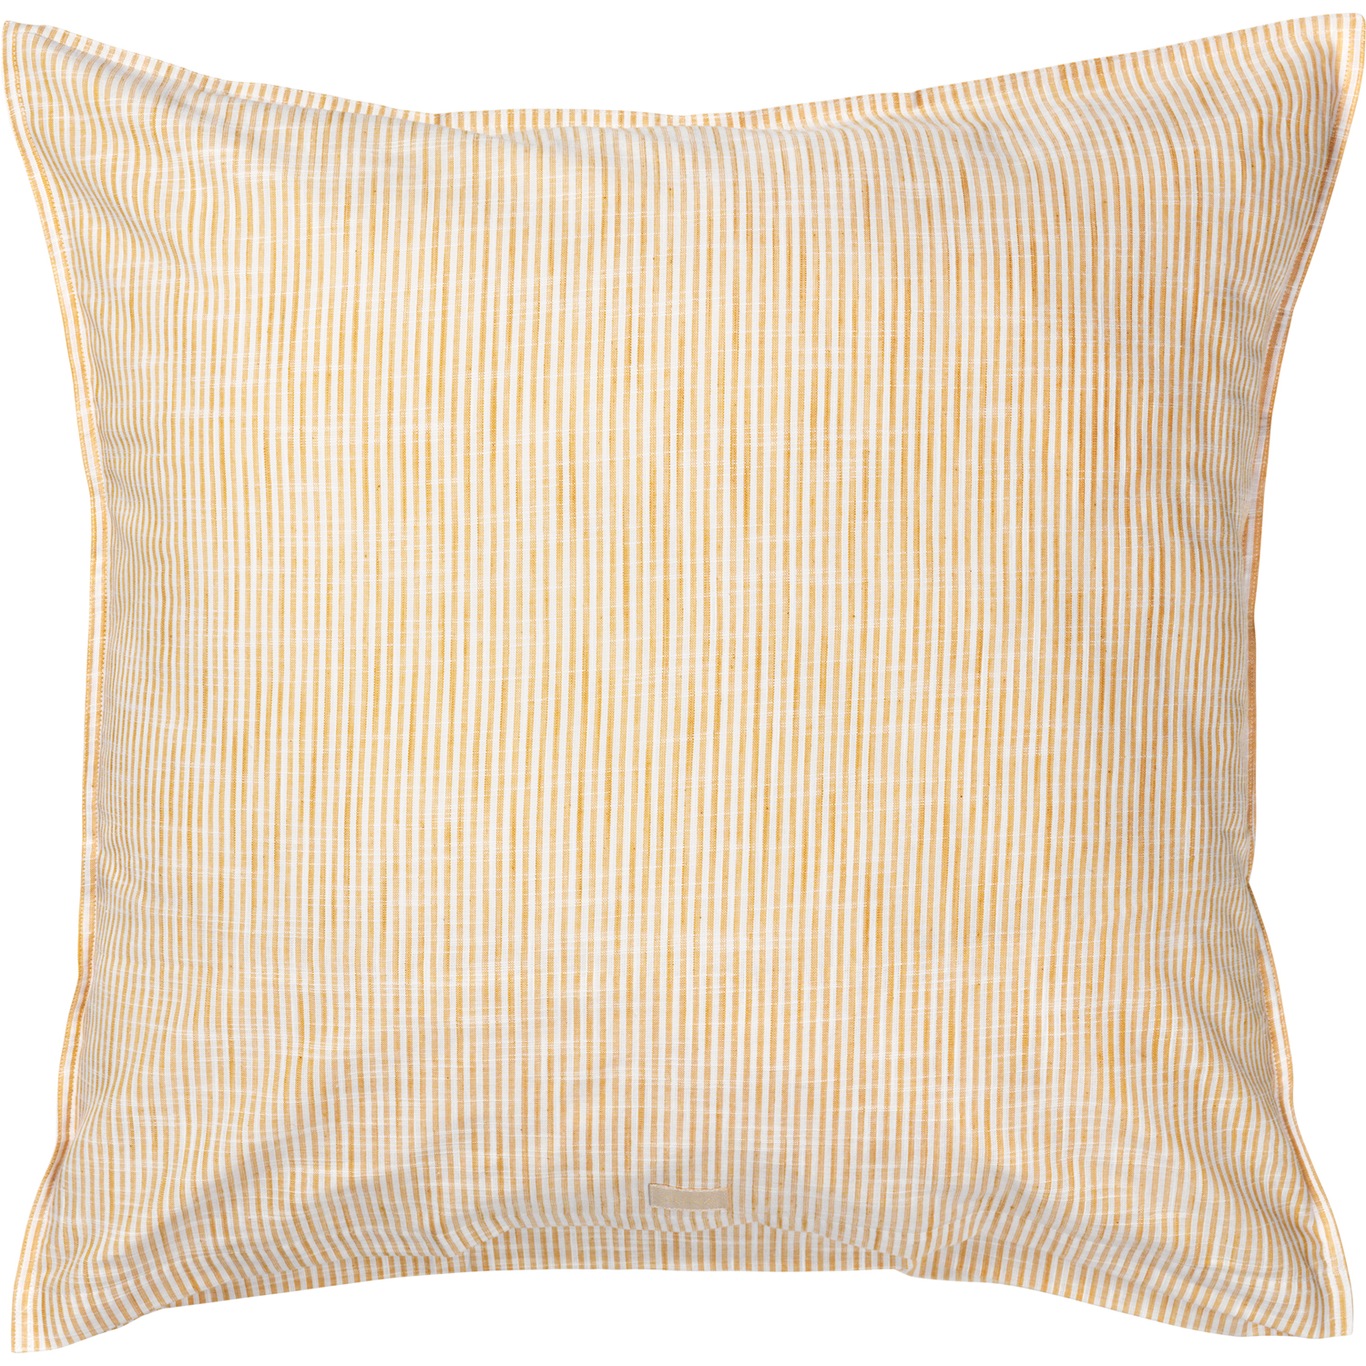 Monochrome Lines Pillowcase 50x60 cm, Yellow